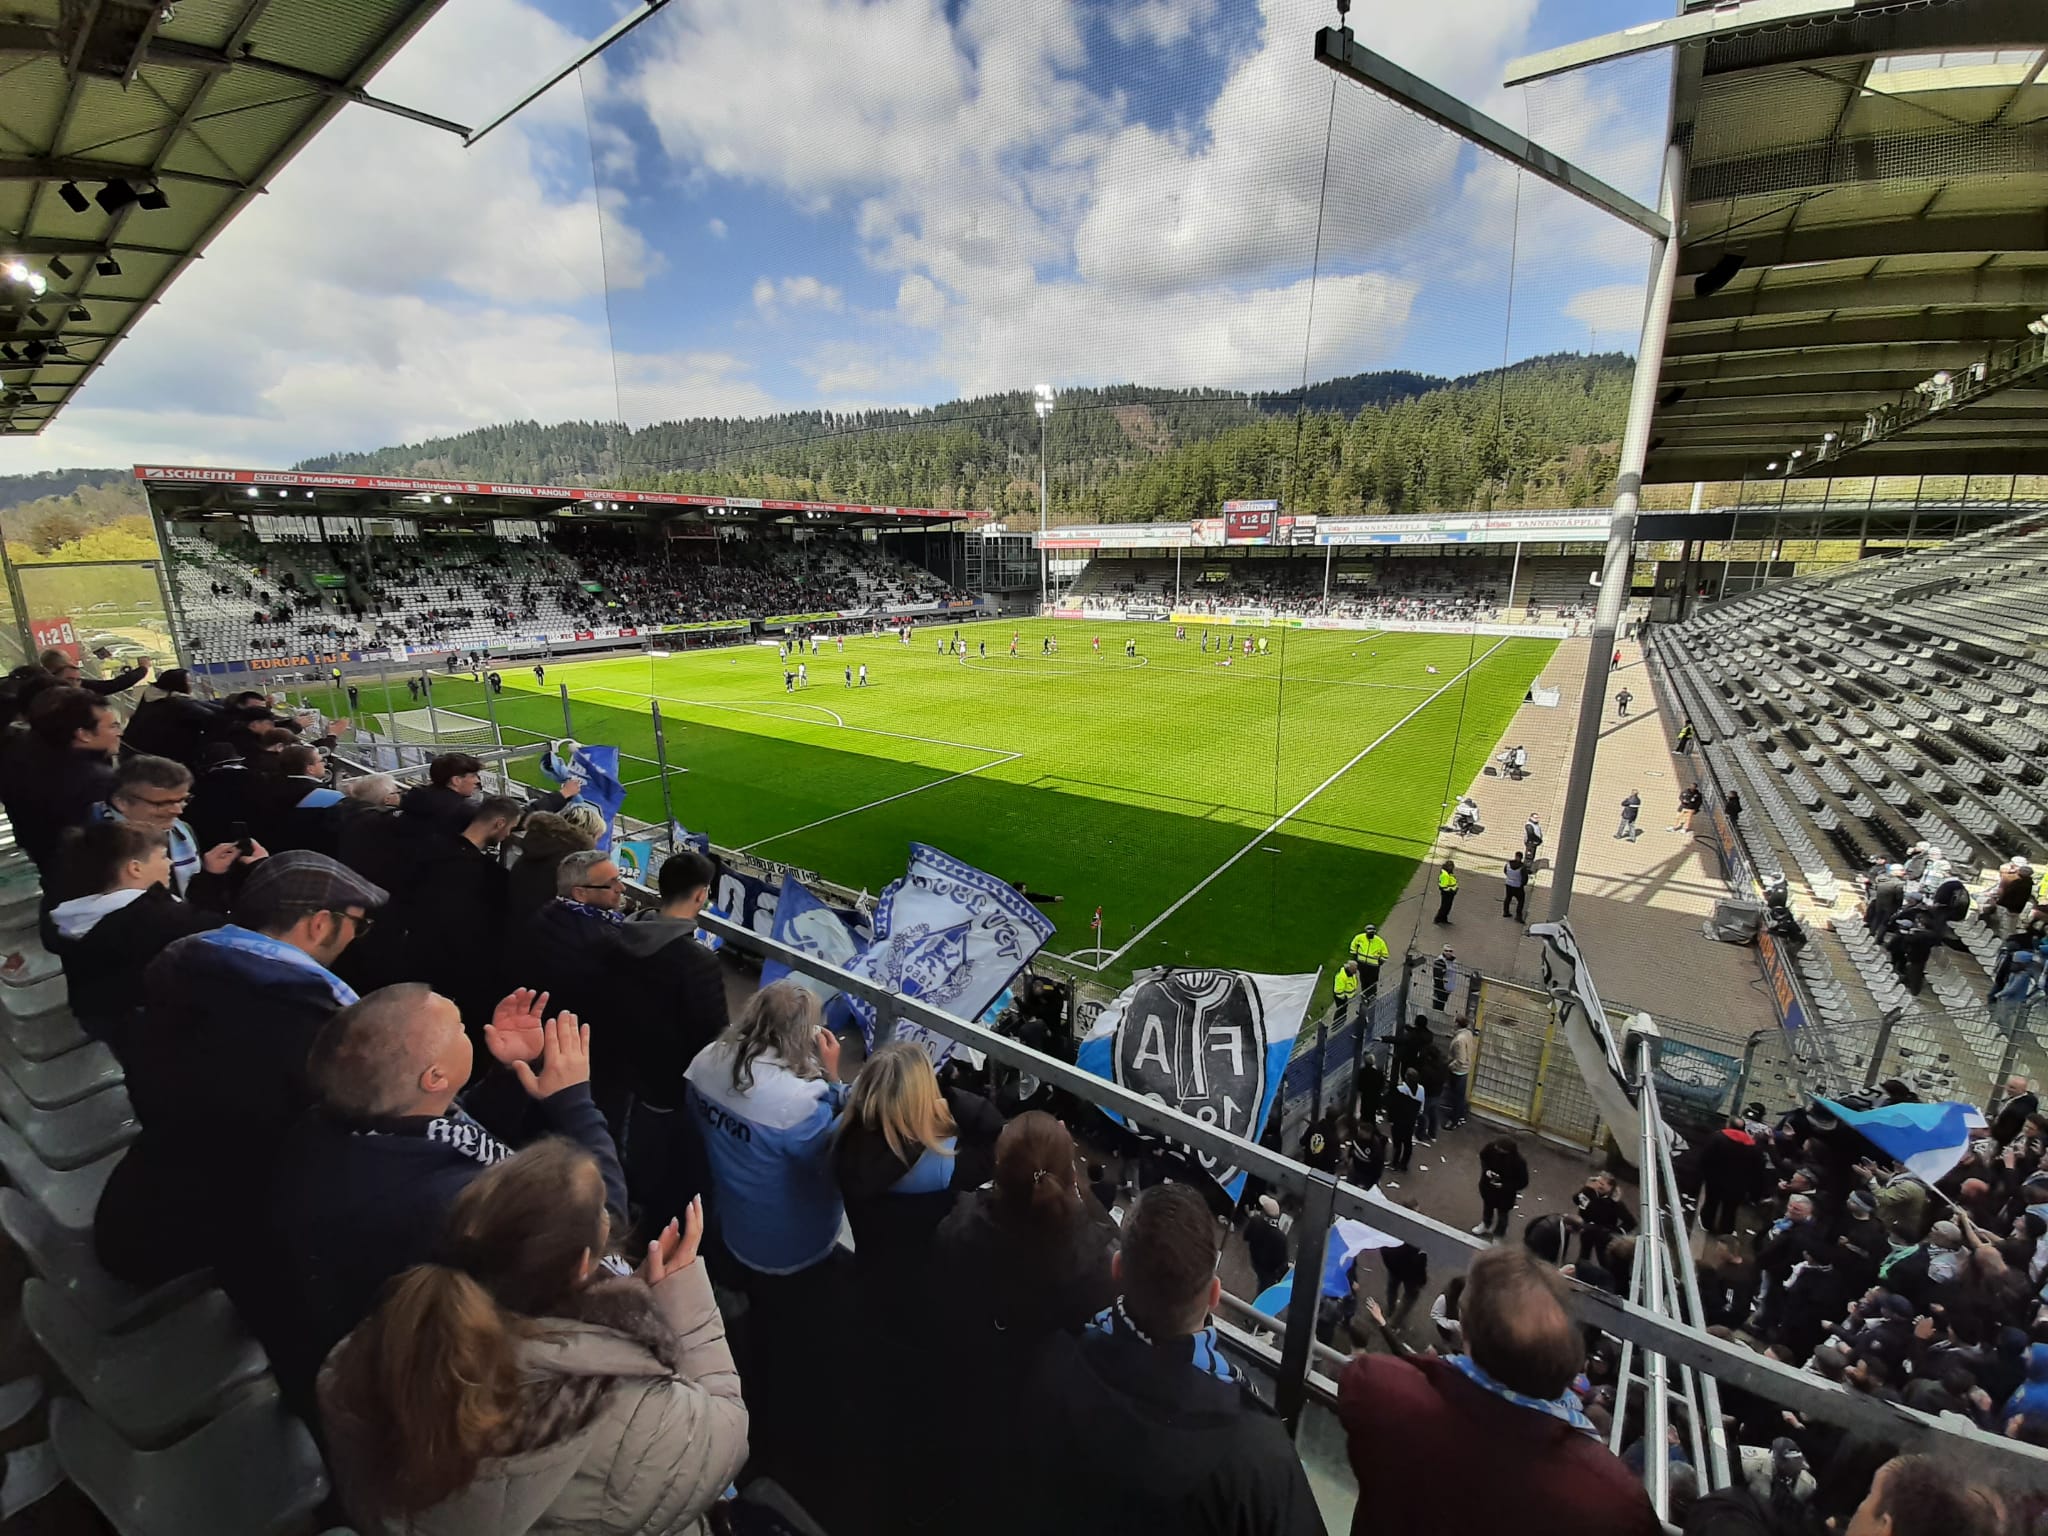 TSV 1860 München - SC Freiburg II placar ao vivo, H2H e escalações